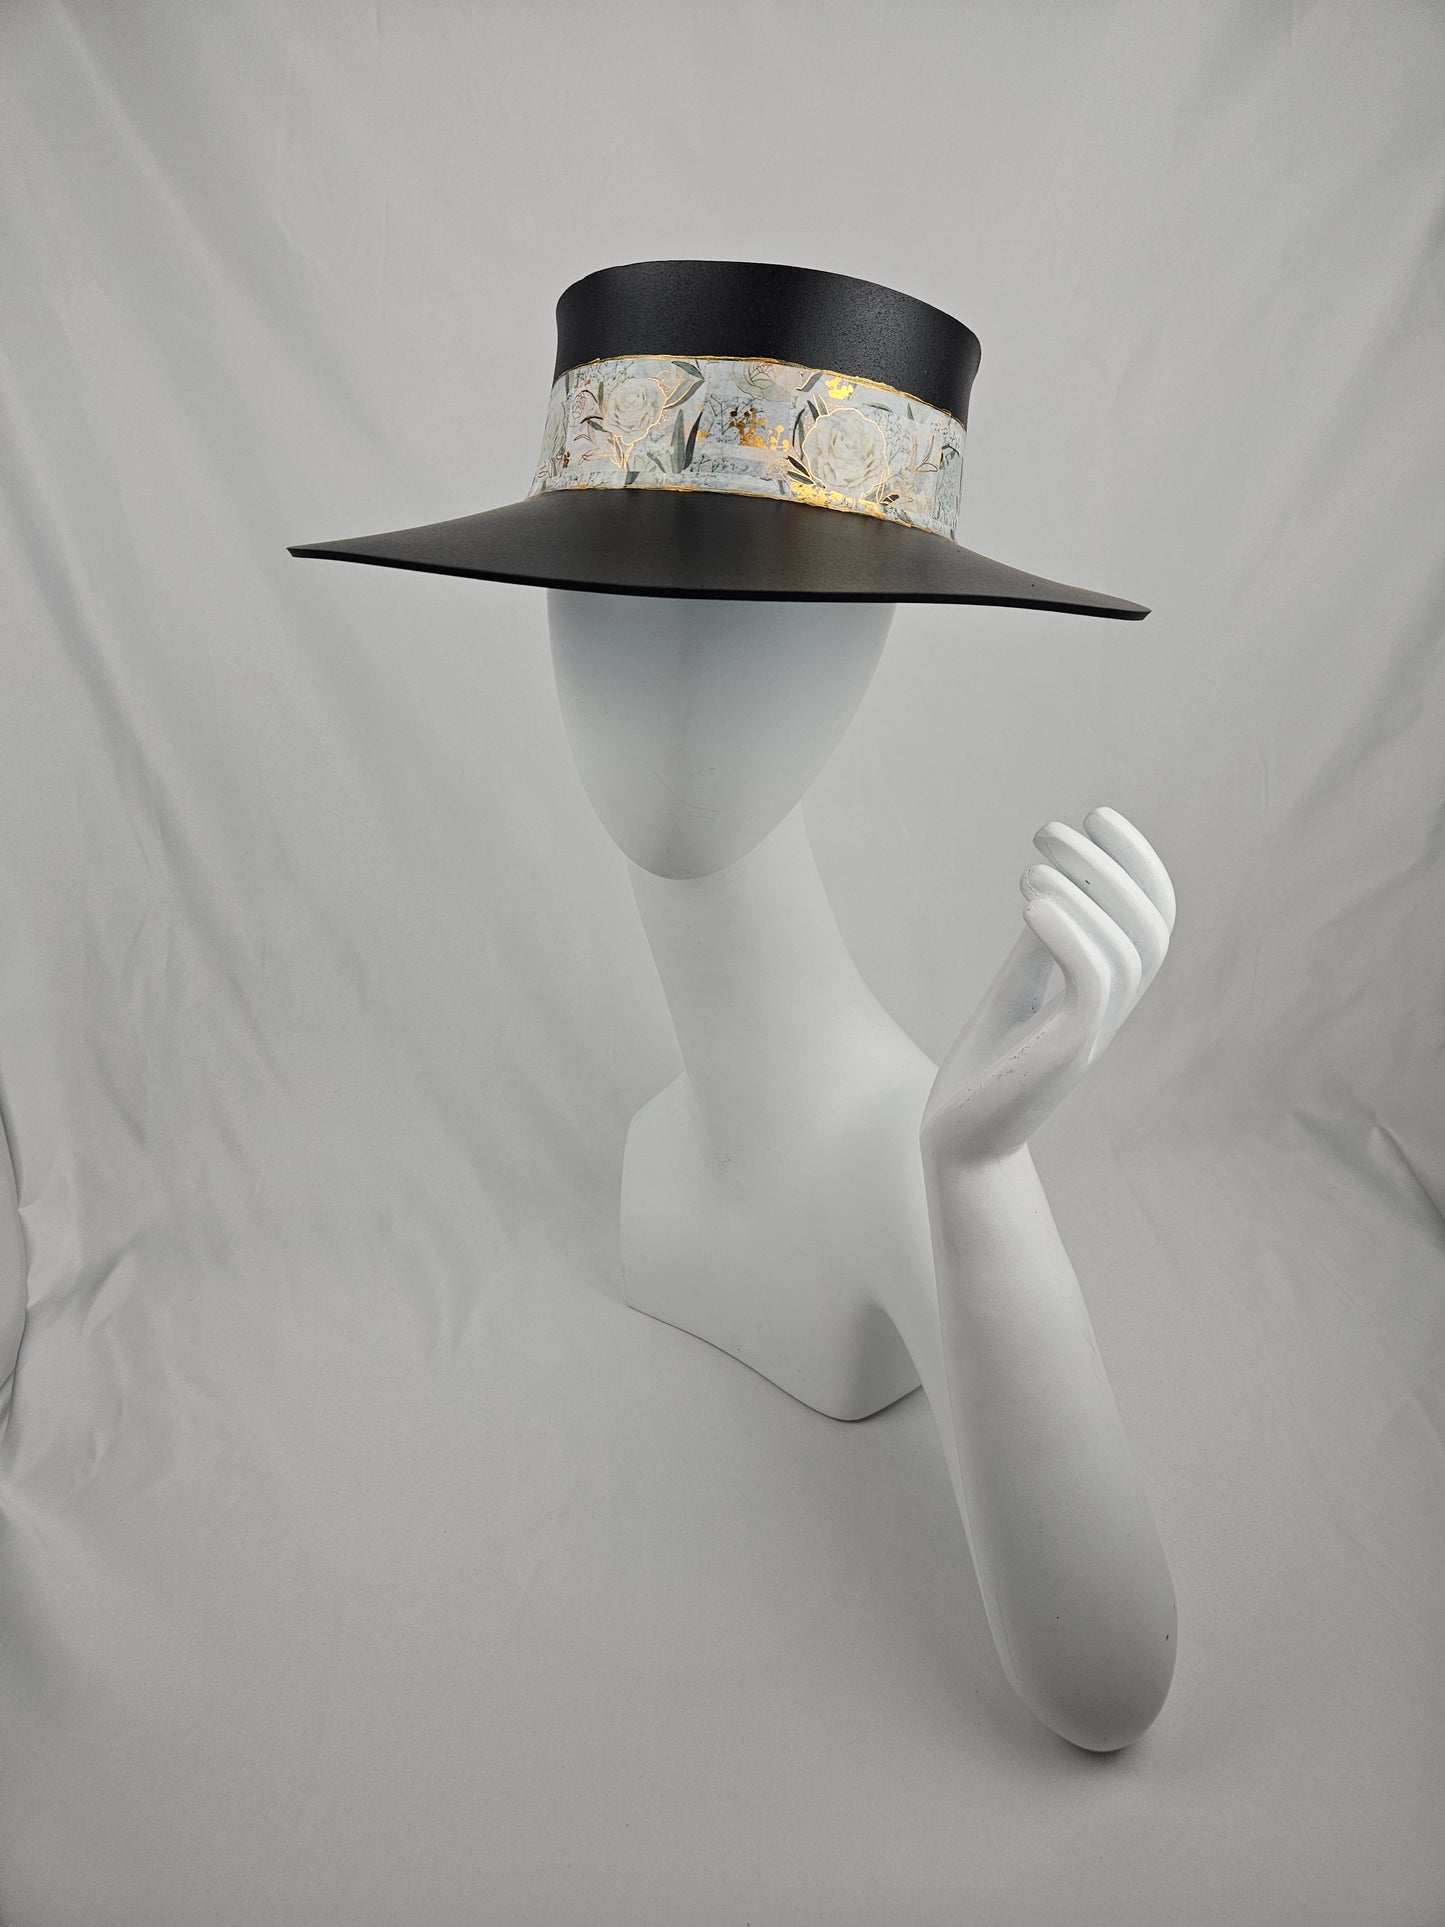 Tall Timeless Black Audrey Foam Sun Visor Hat with Elegant Golden and White Floral Band: 1950s, Walks, Brunch, Tea, Golf, Wedding, Church, No Headache, Easter, Pool